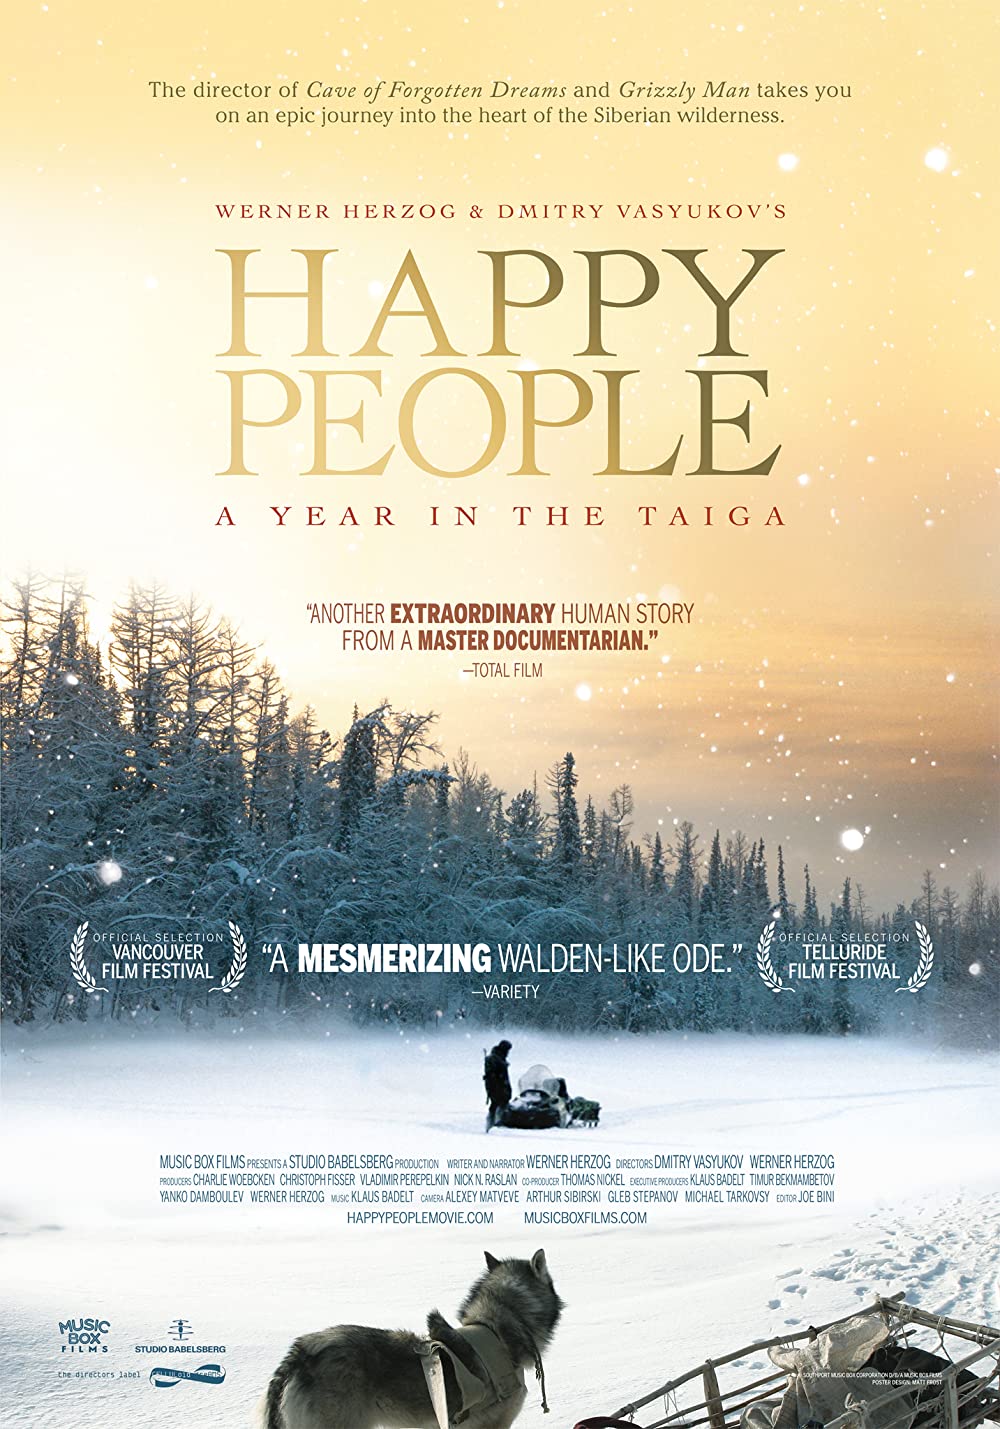 Filmbeschreibung zu Happy People: A Year in the Taiga